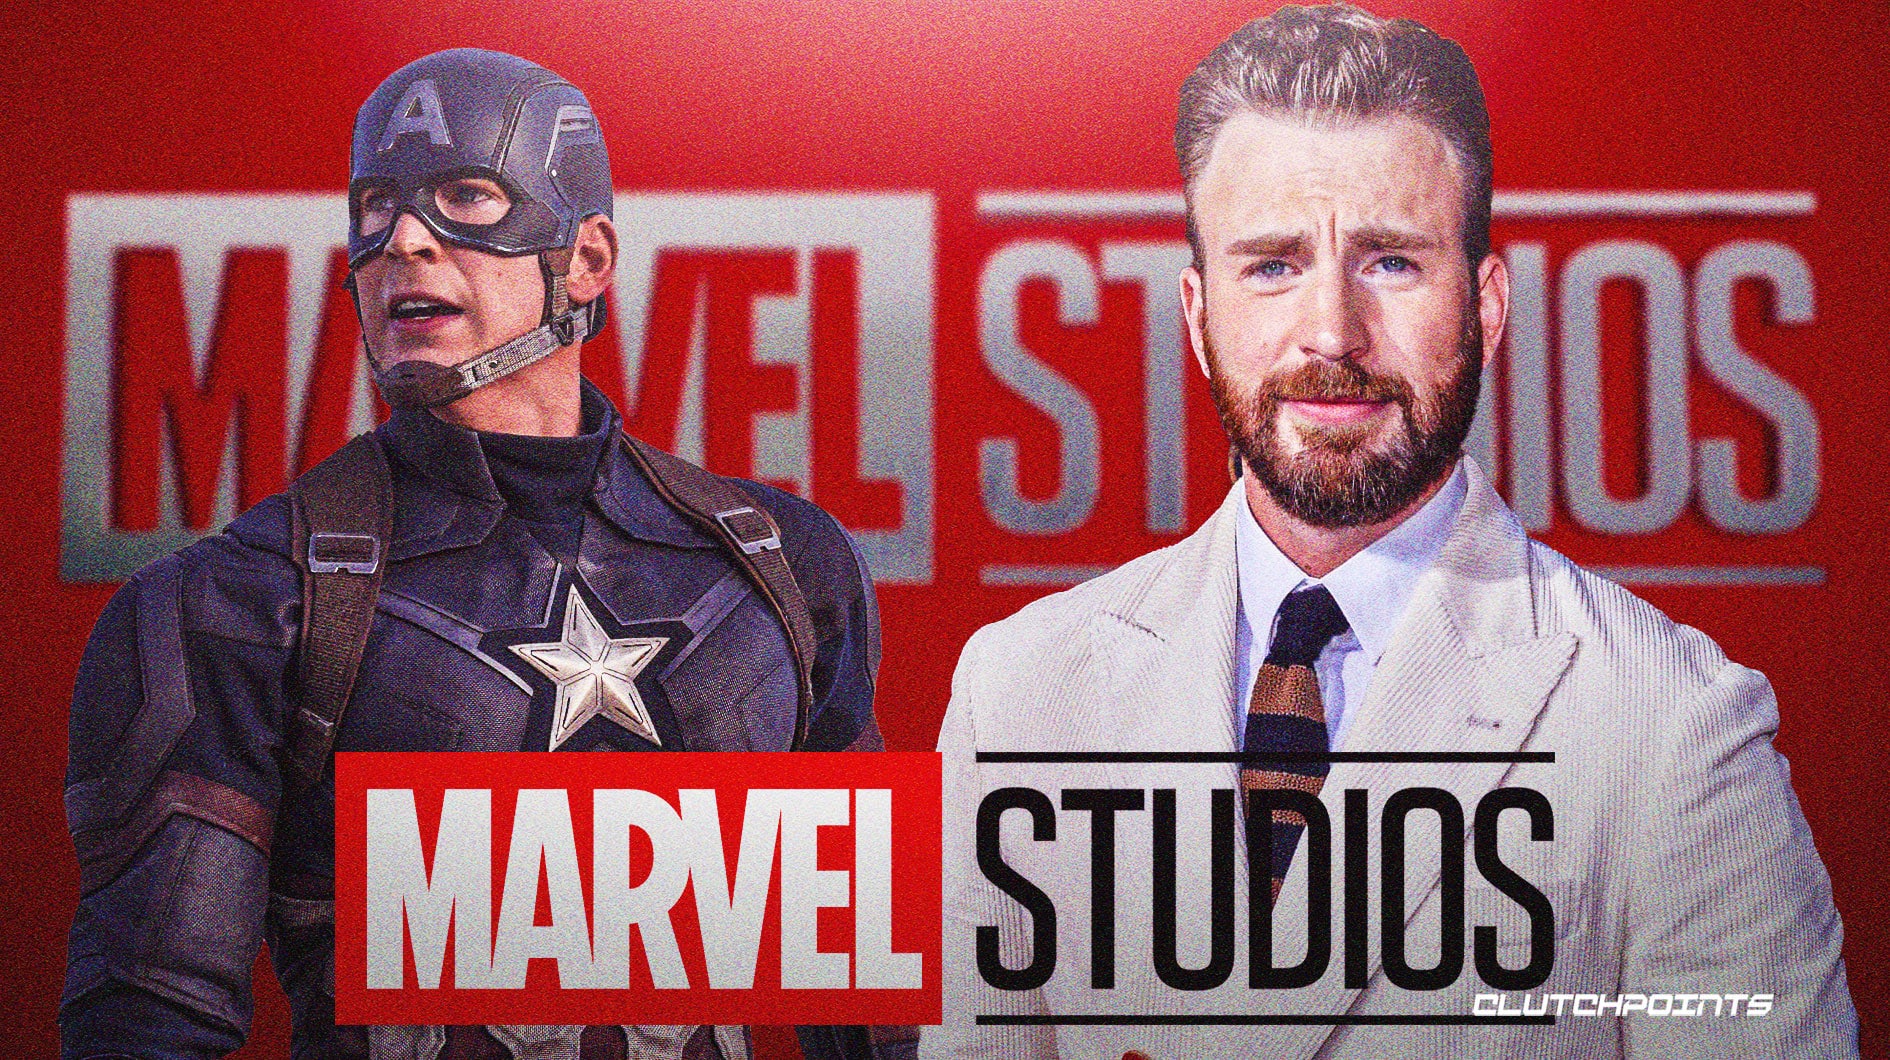 Chris Evans on returning to Captain America: “I'll never say never